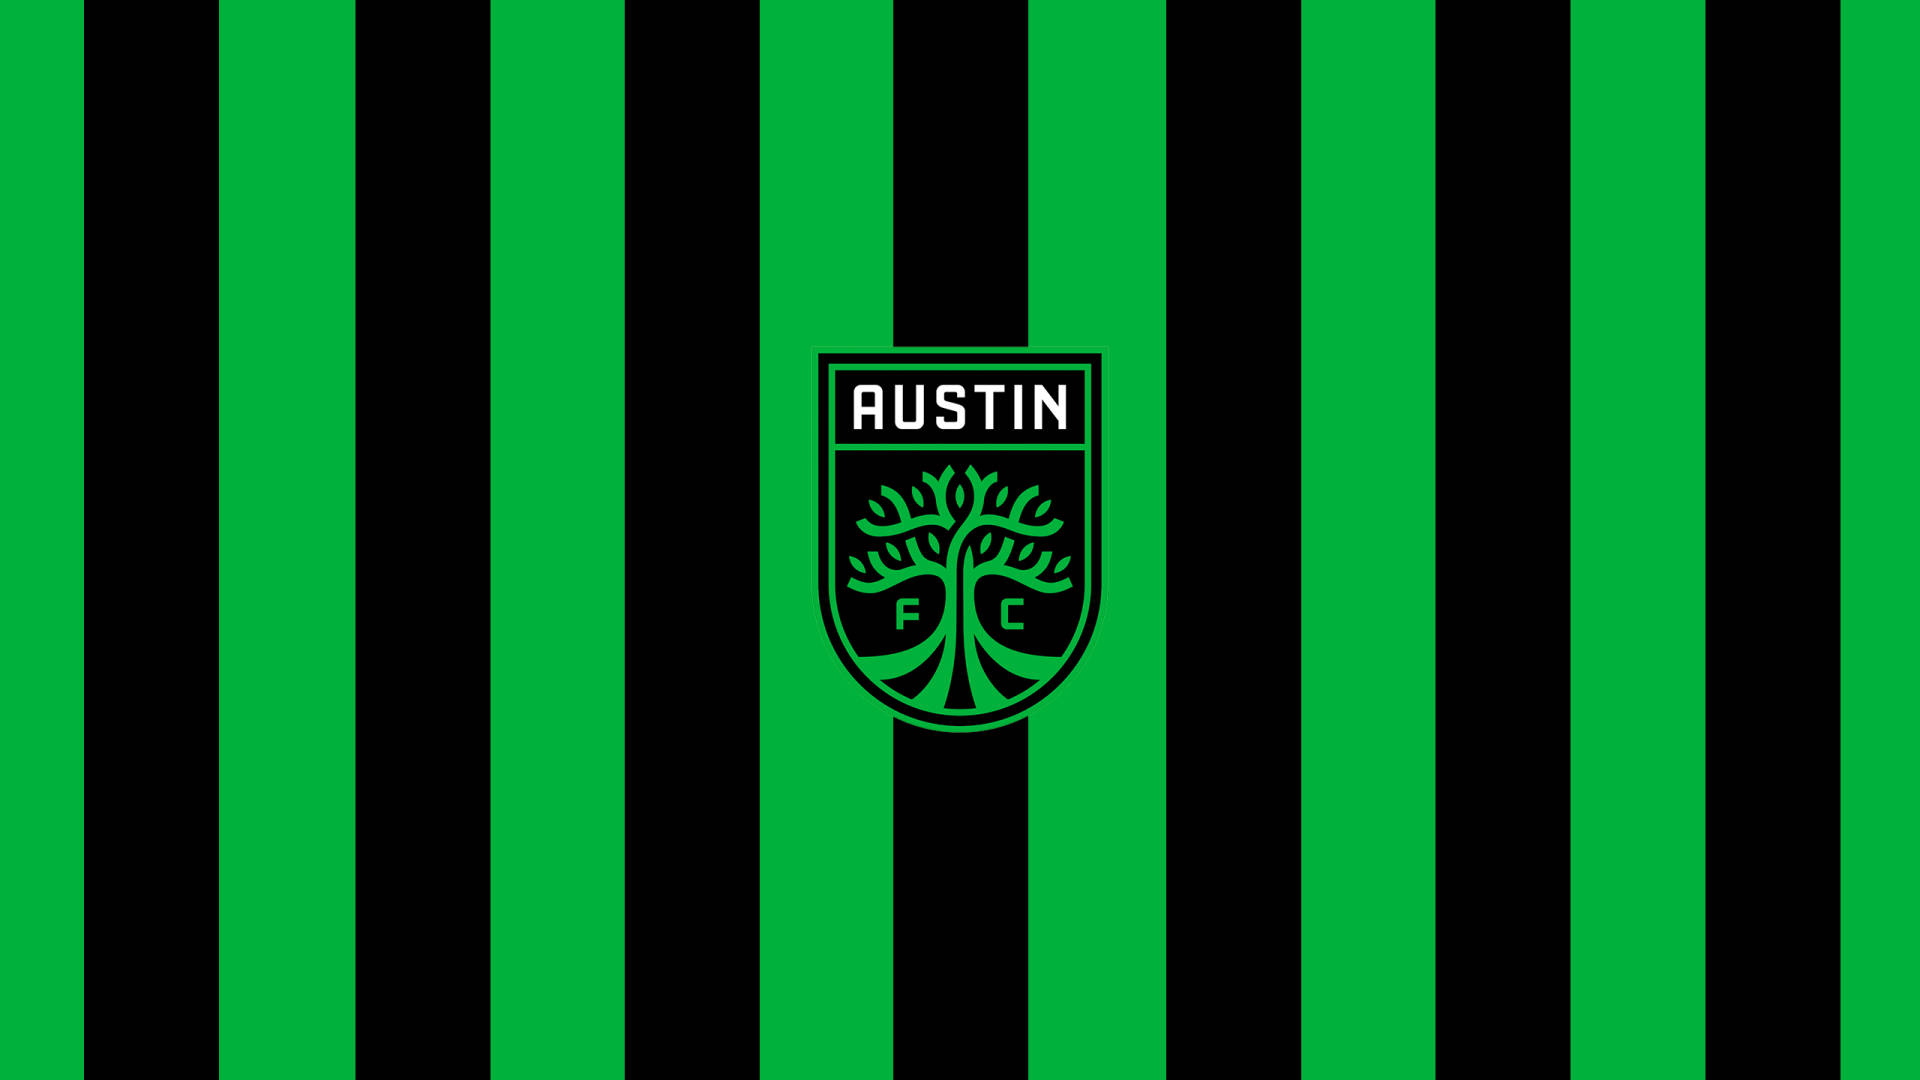 Patrónverde Del Logotipo Del Club De Fútbol Austin Fc Fondo de pantalla